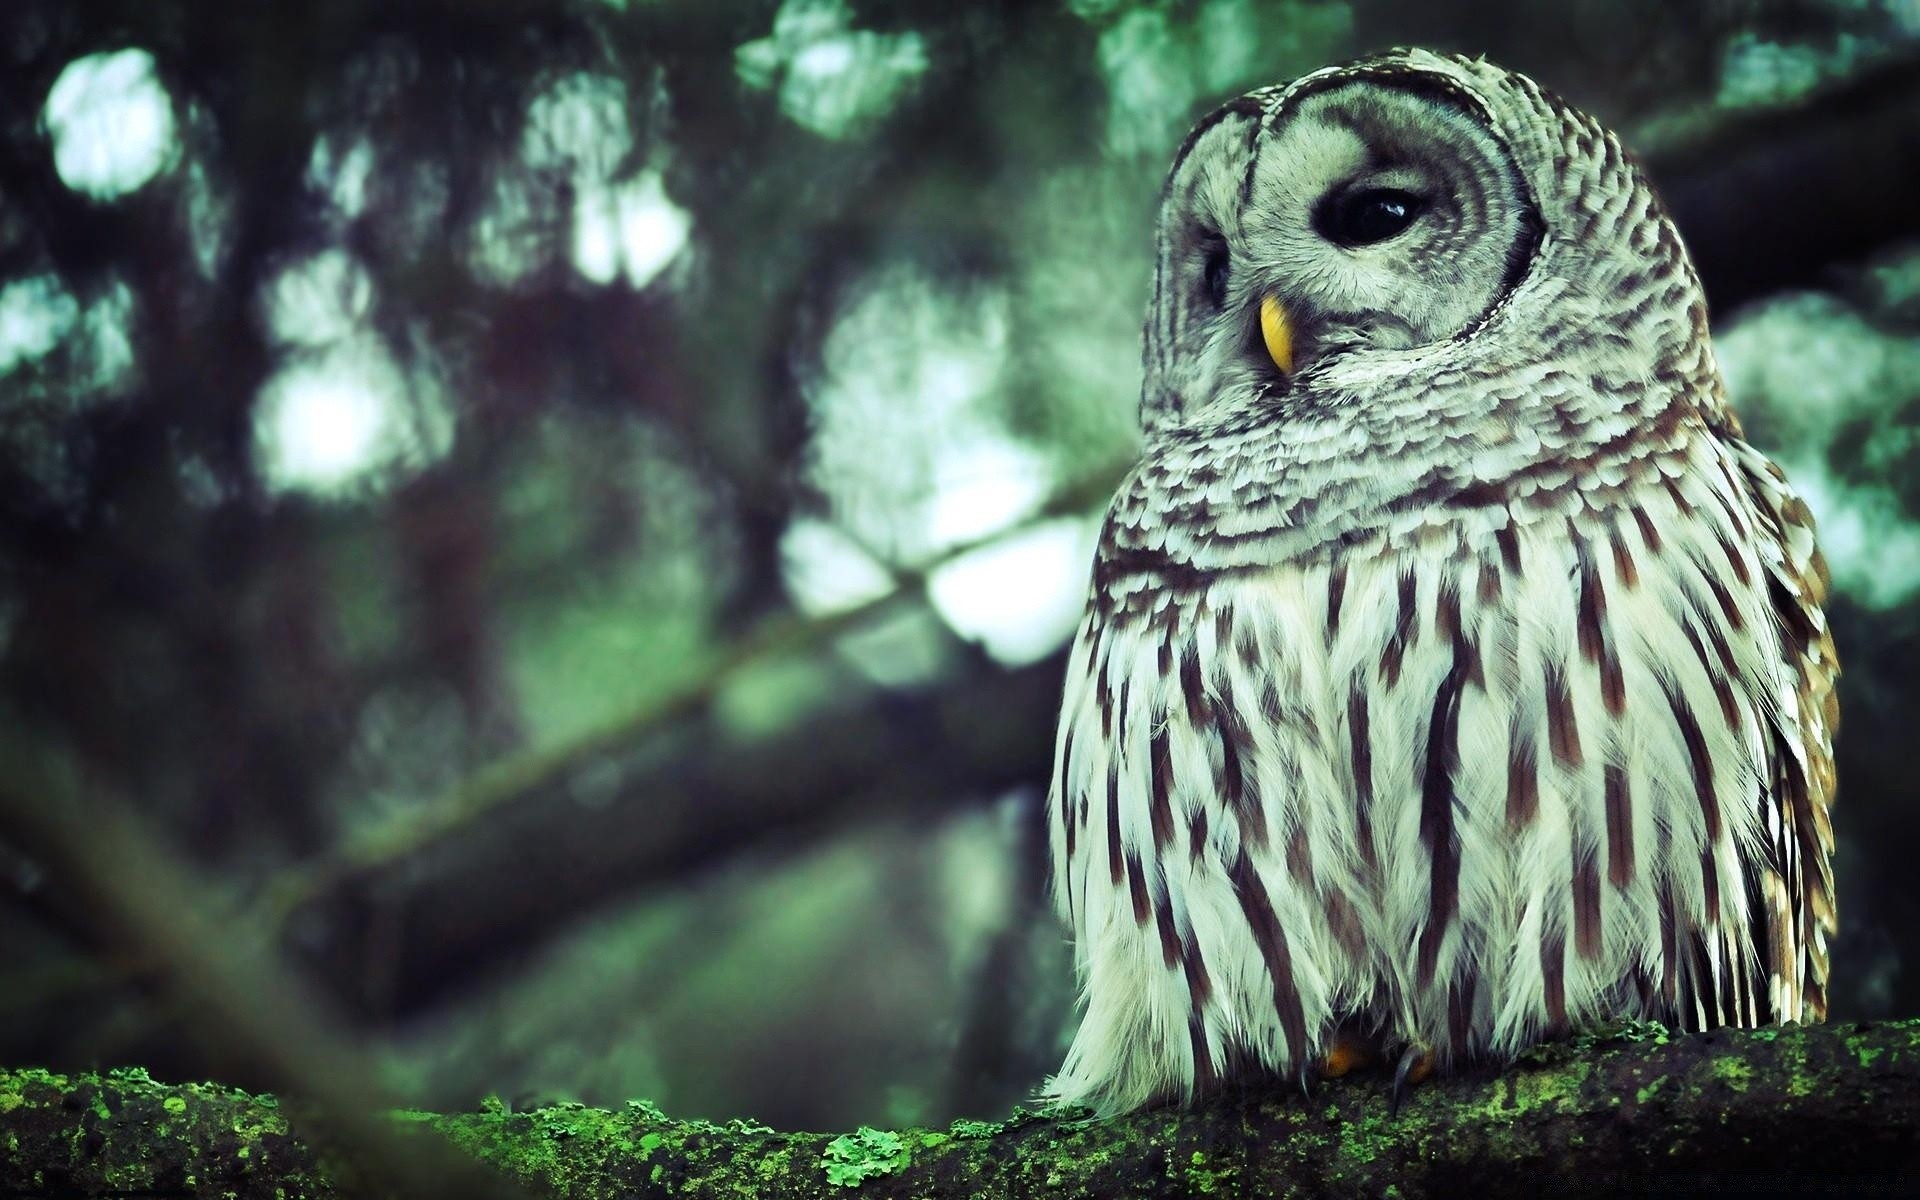 owl nature bird wildlife wild outdoors animal wood portrait